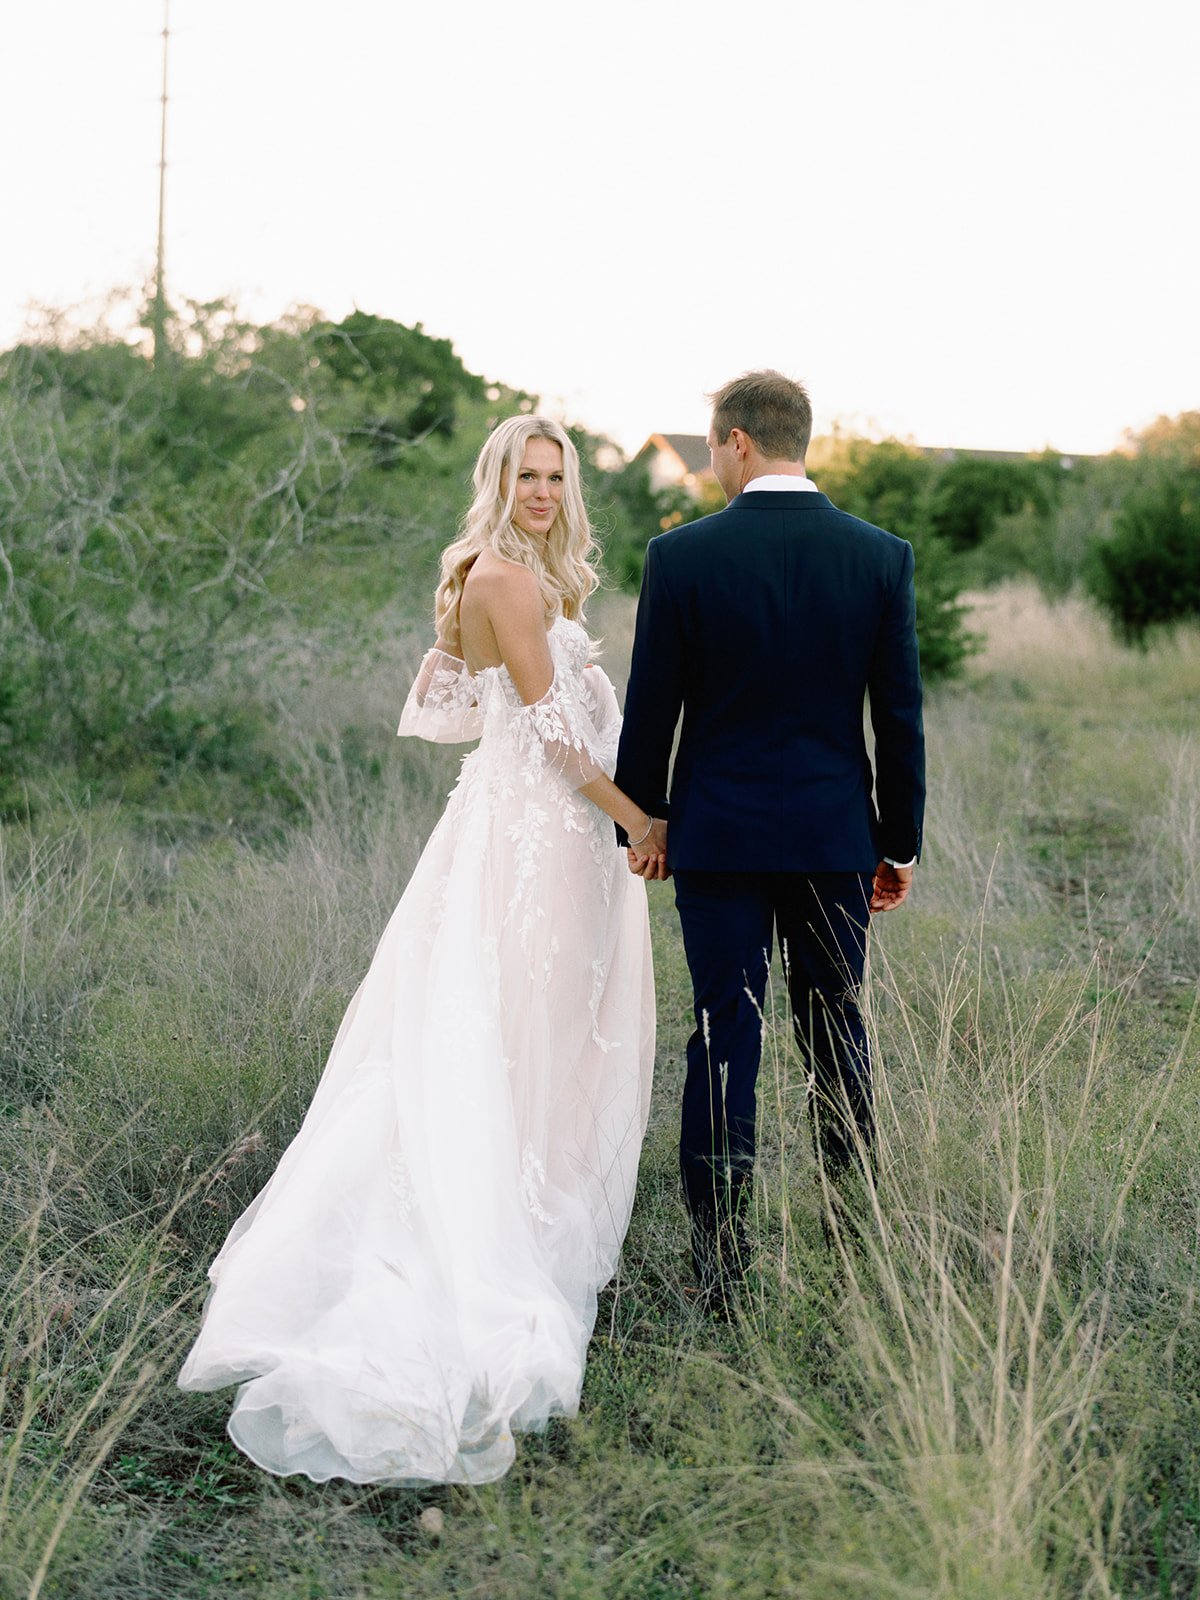 Best-Austin-Wedding-Photographers-Elopement-Film-35mm-Asheville-Santa-Barbara-Backyard-103.jpg